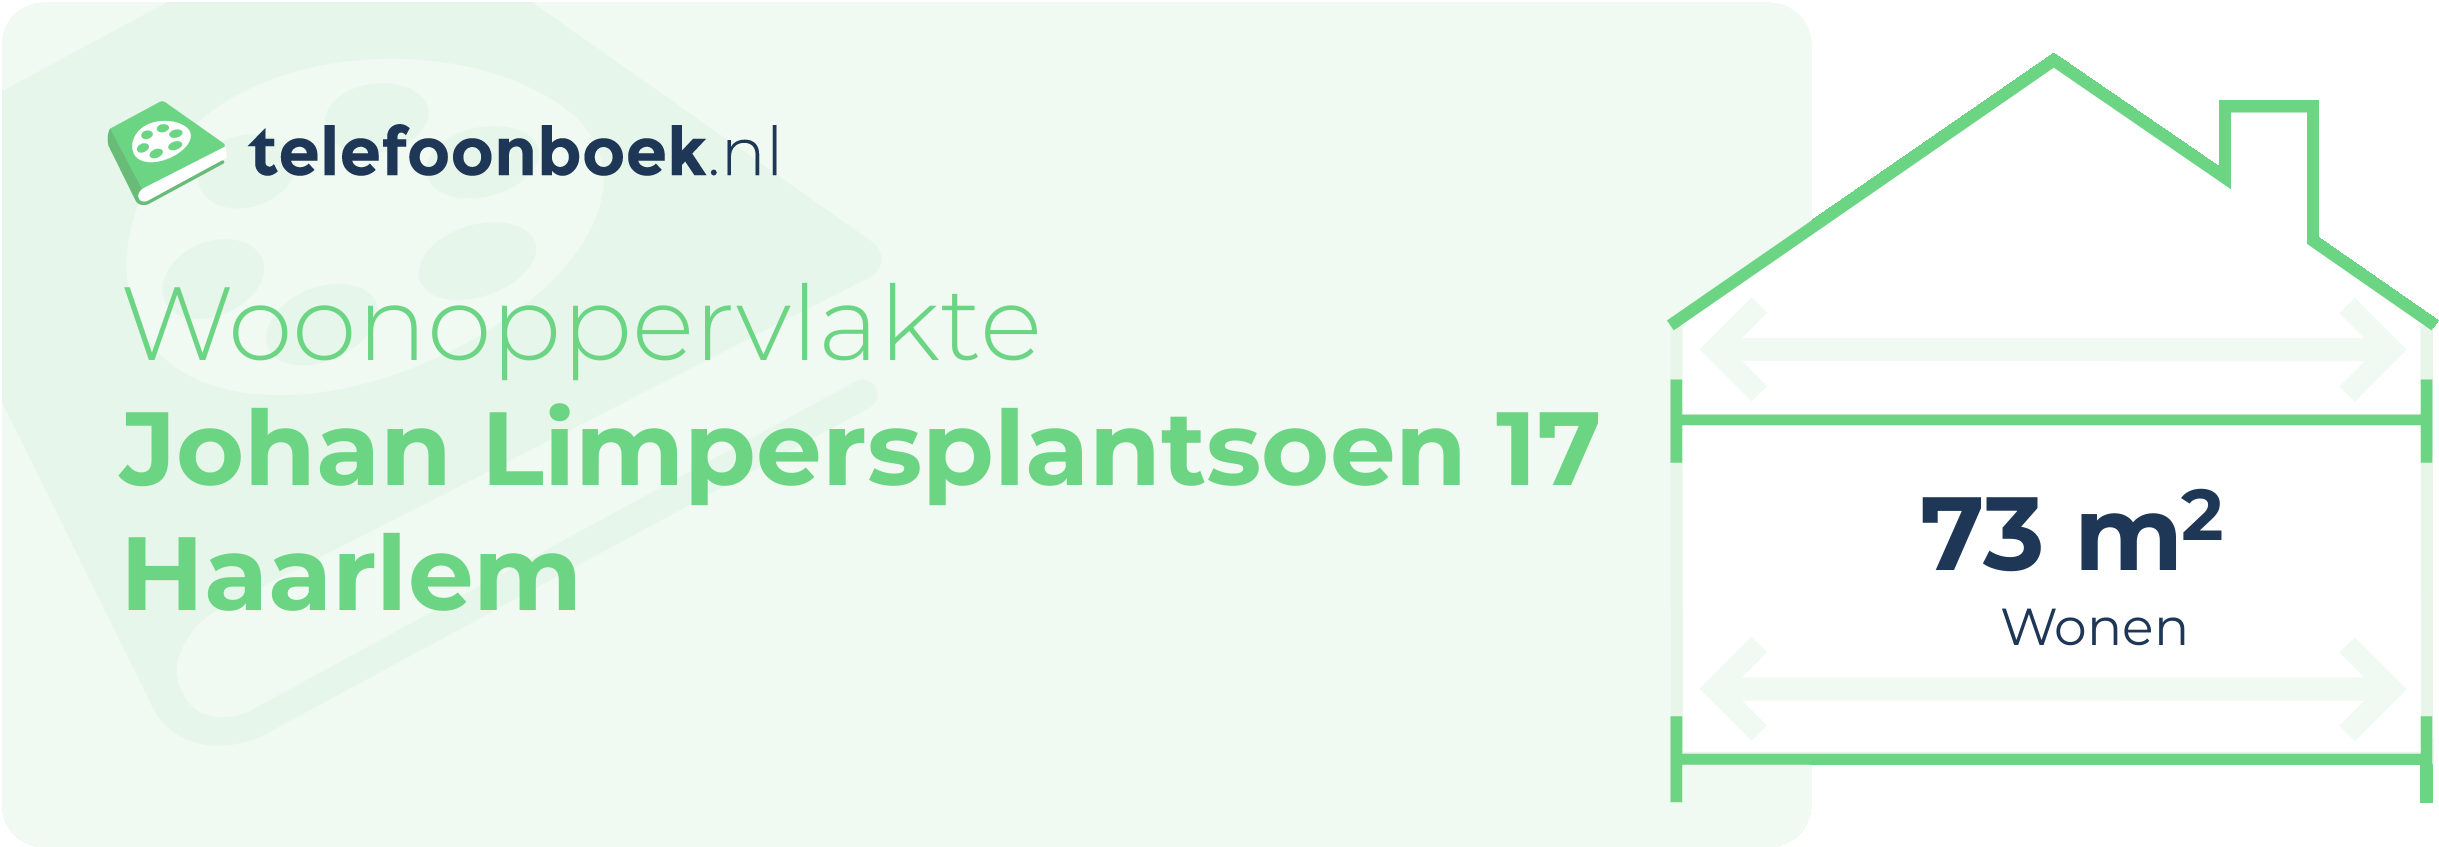 Woonoppervlakte Johan Limpersplantsoen 17 Haarlem